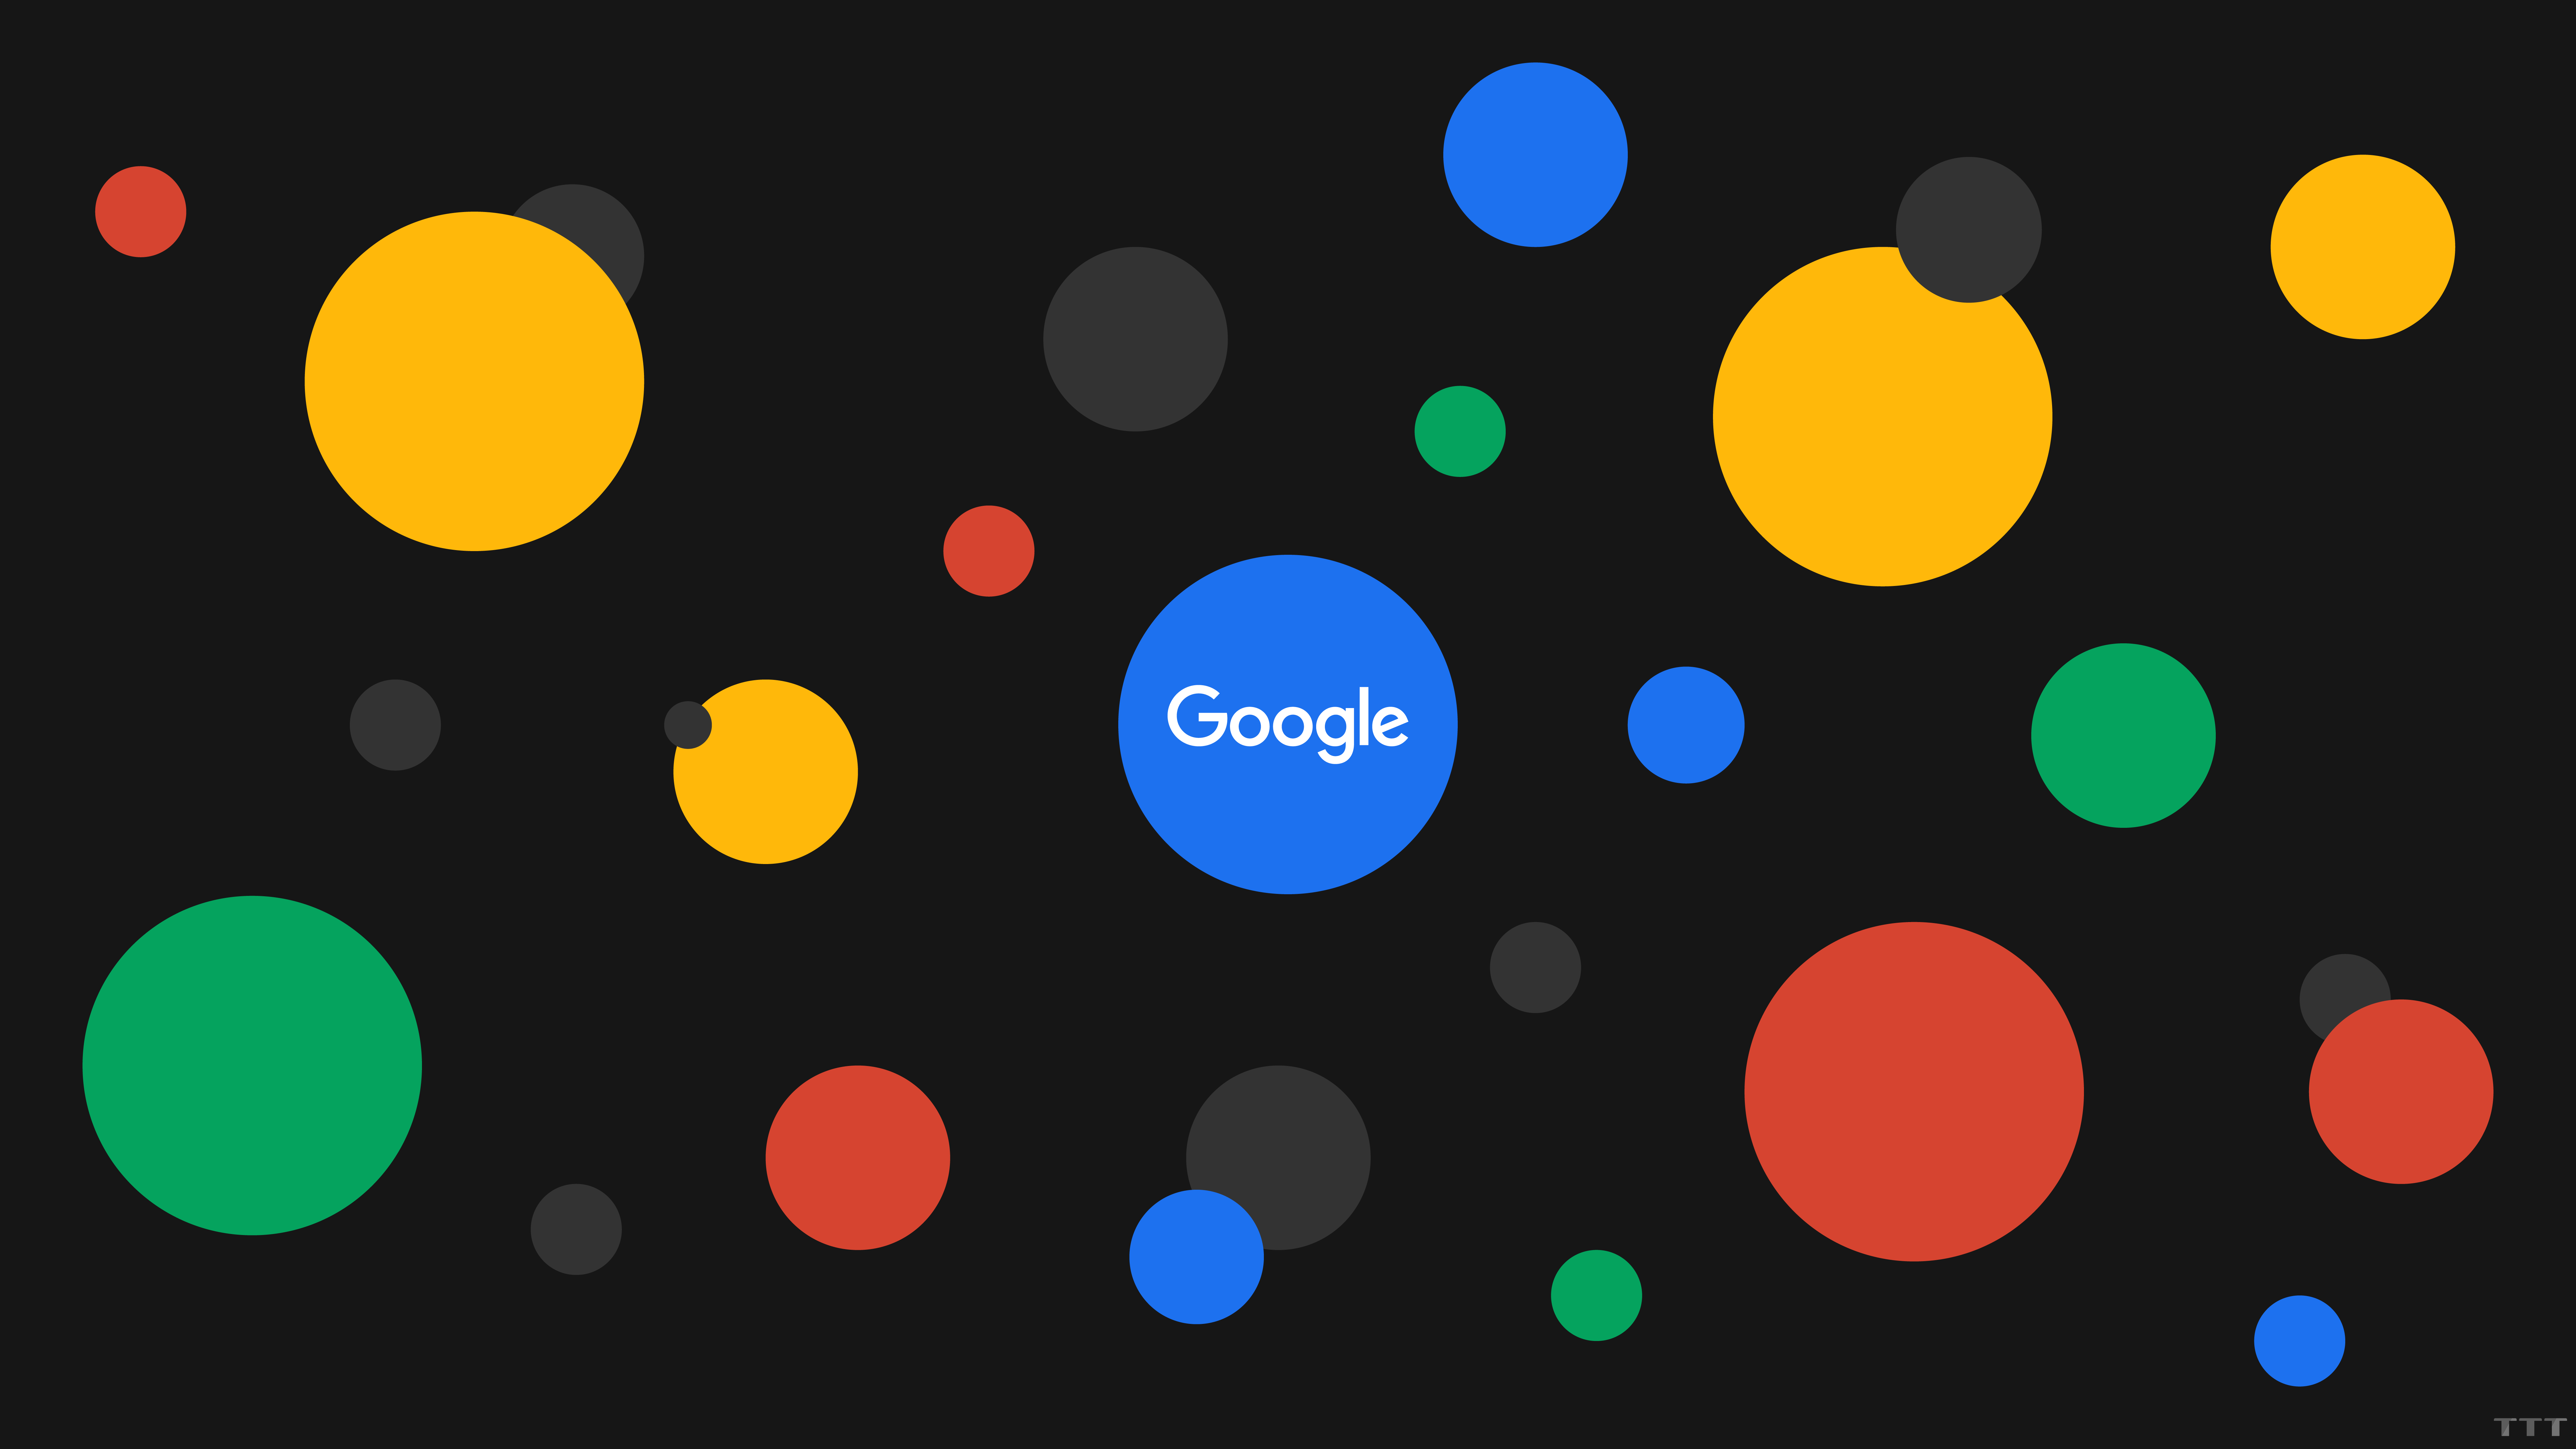 Google Wallpaper Android Patible